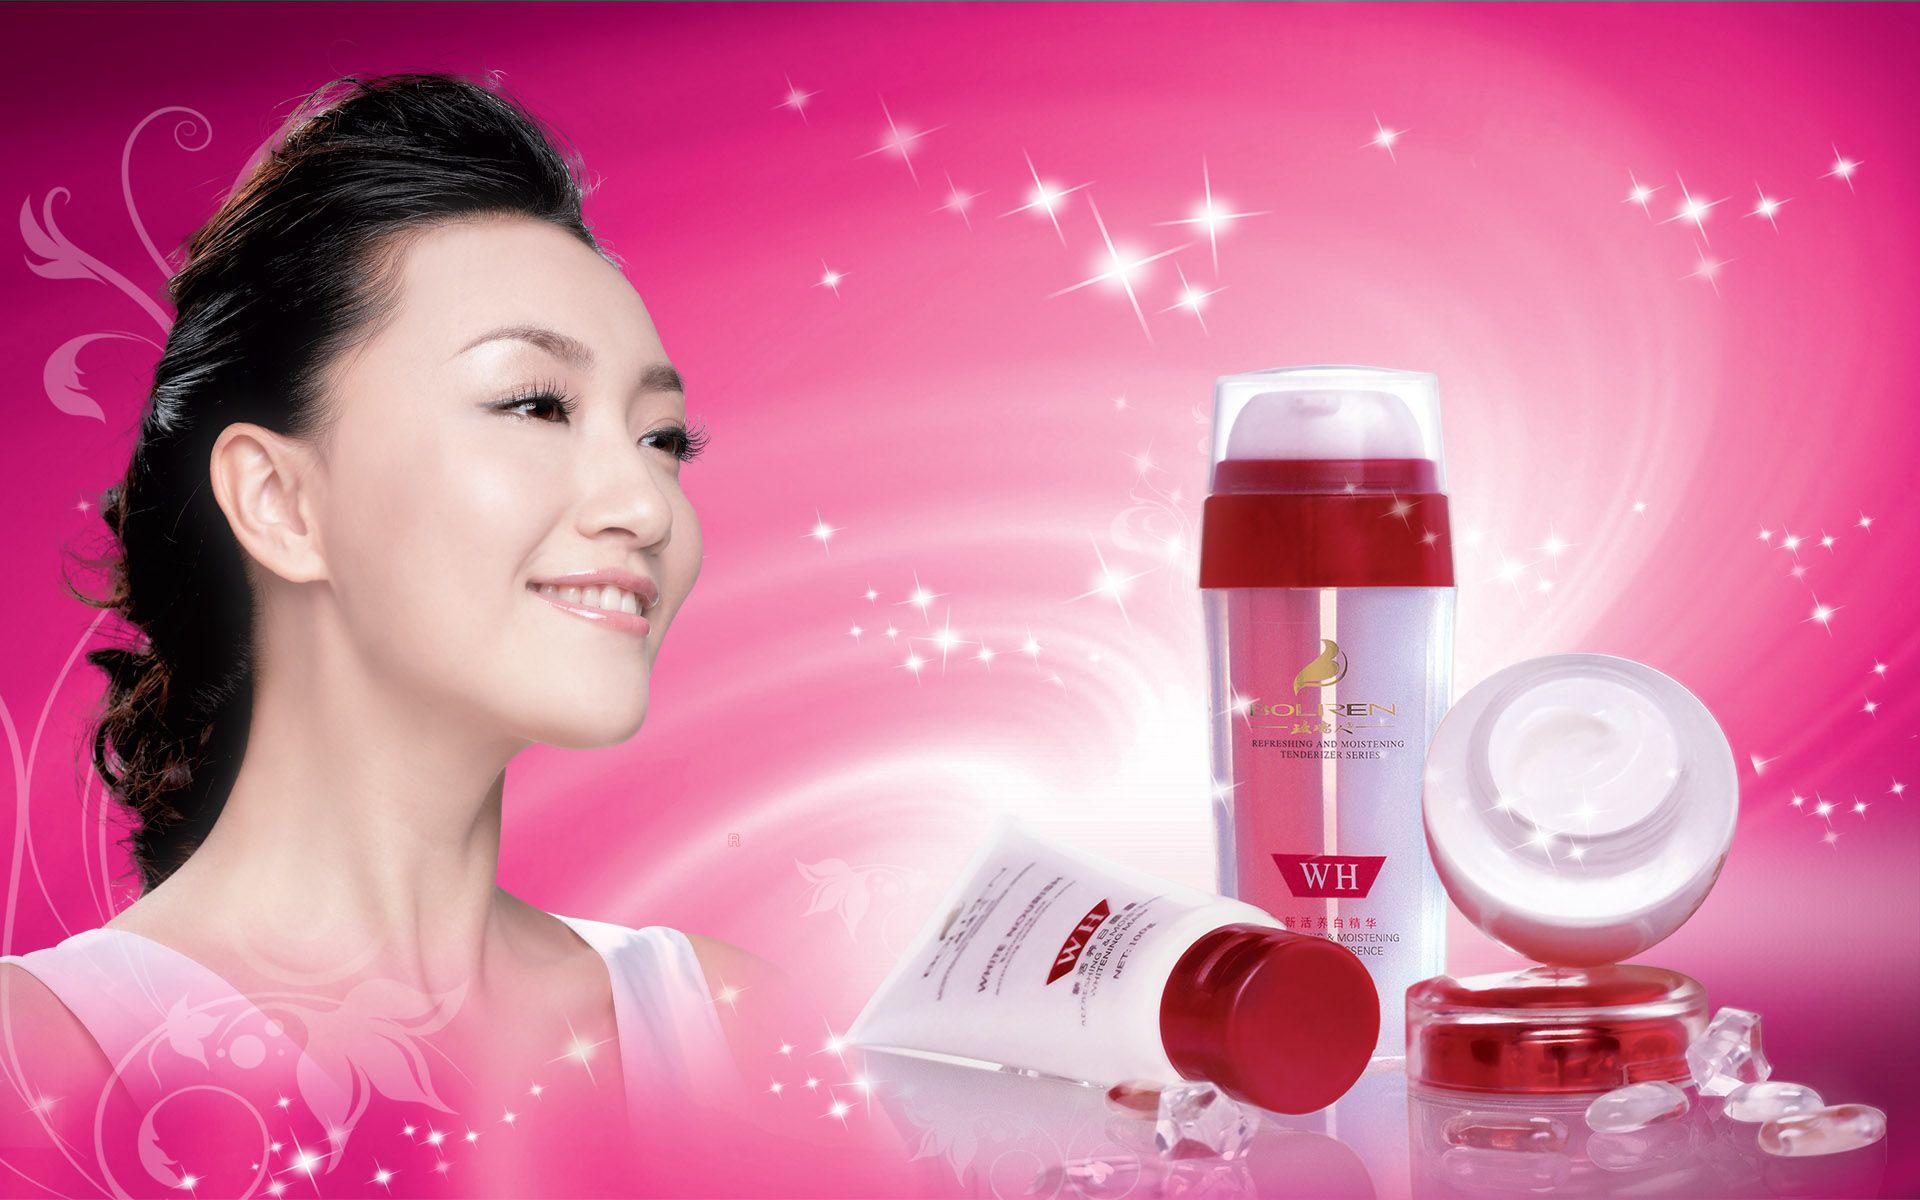 HD cosmetics ads wallpaper 1356